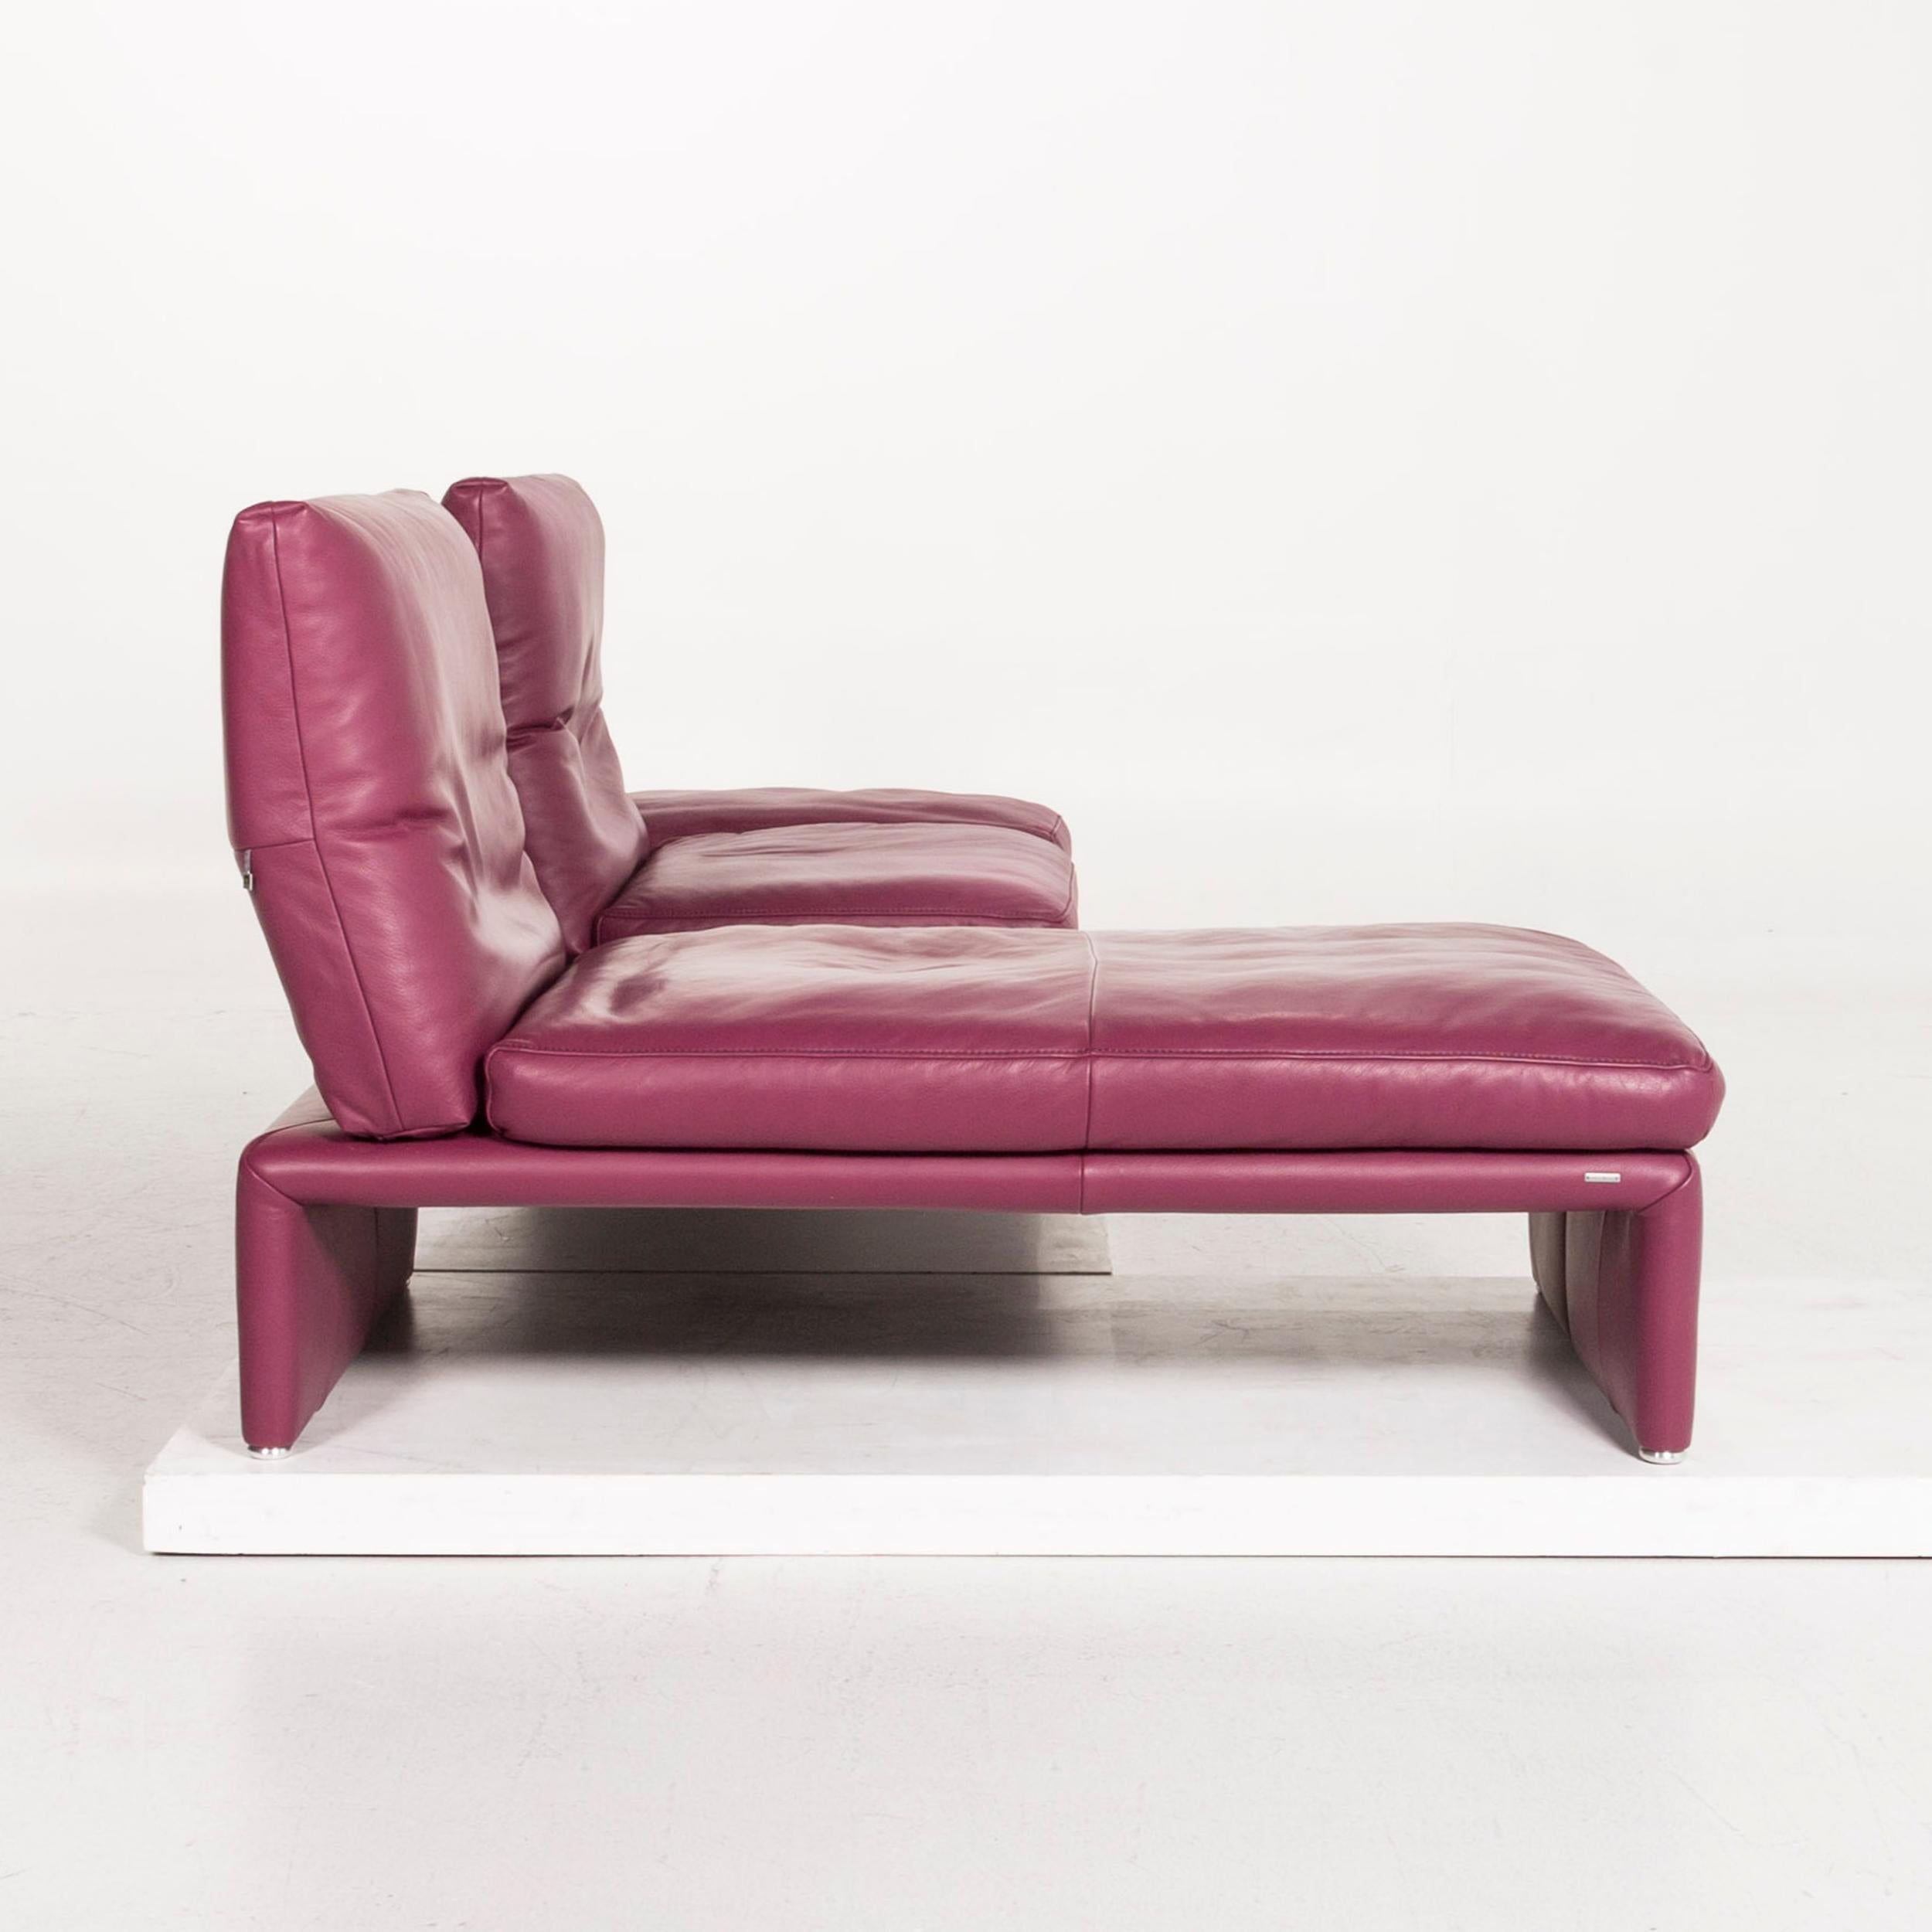 Koinor Raoul Leather Corner Sofa Purple Sofa Function Couch 2